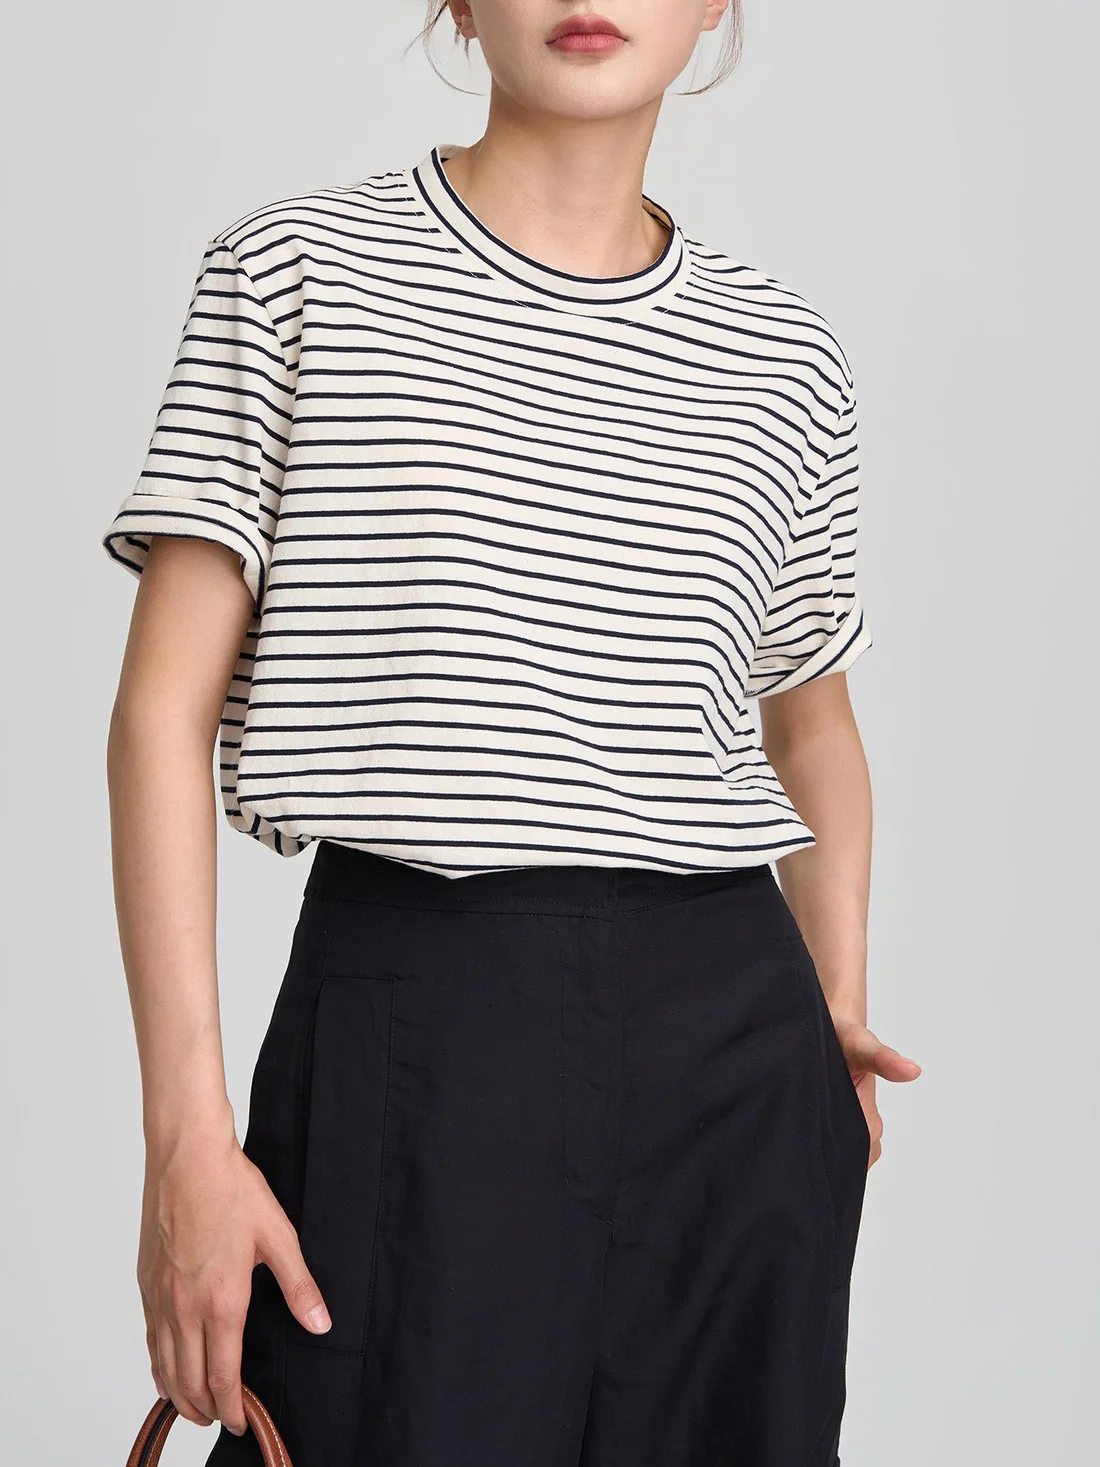 

Oversize Marine Tee Striped Short Sleeve T Shirt Crew Neck Contrast Women Cotton Essentials Tops